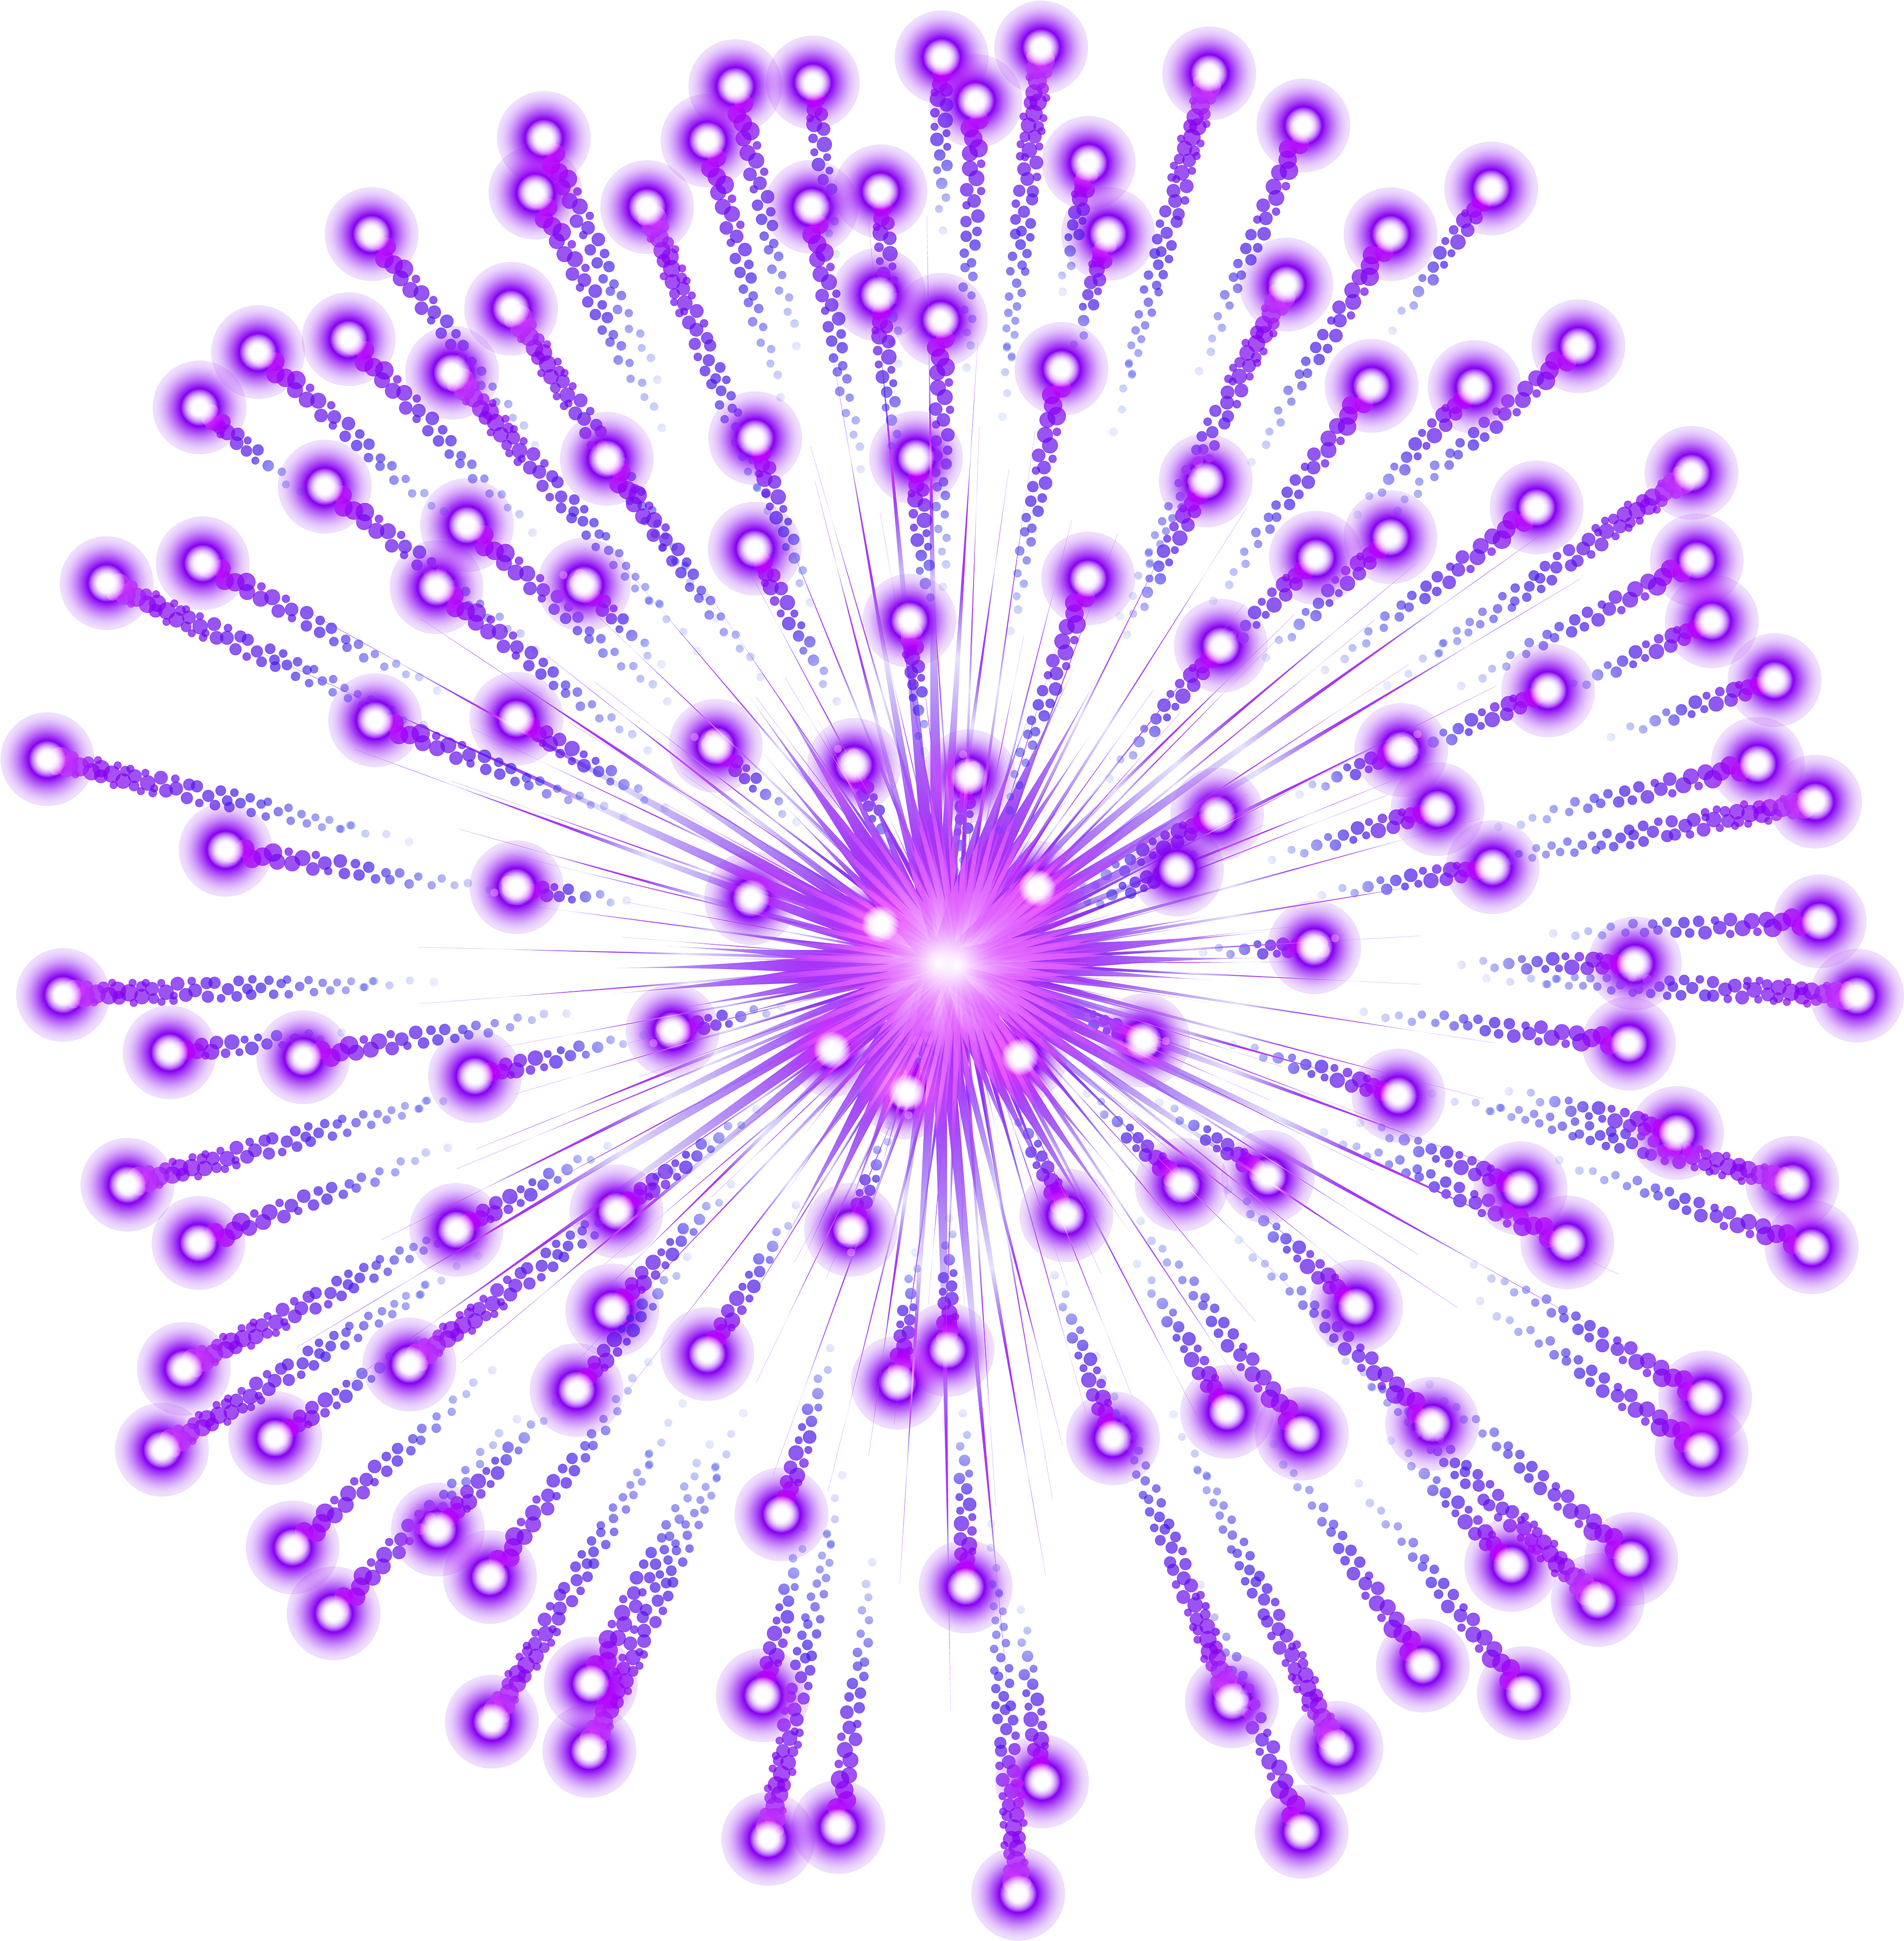 Purple Firework Explosion Graphic